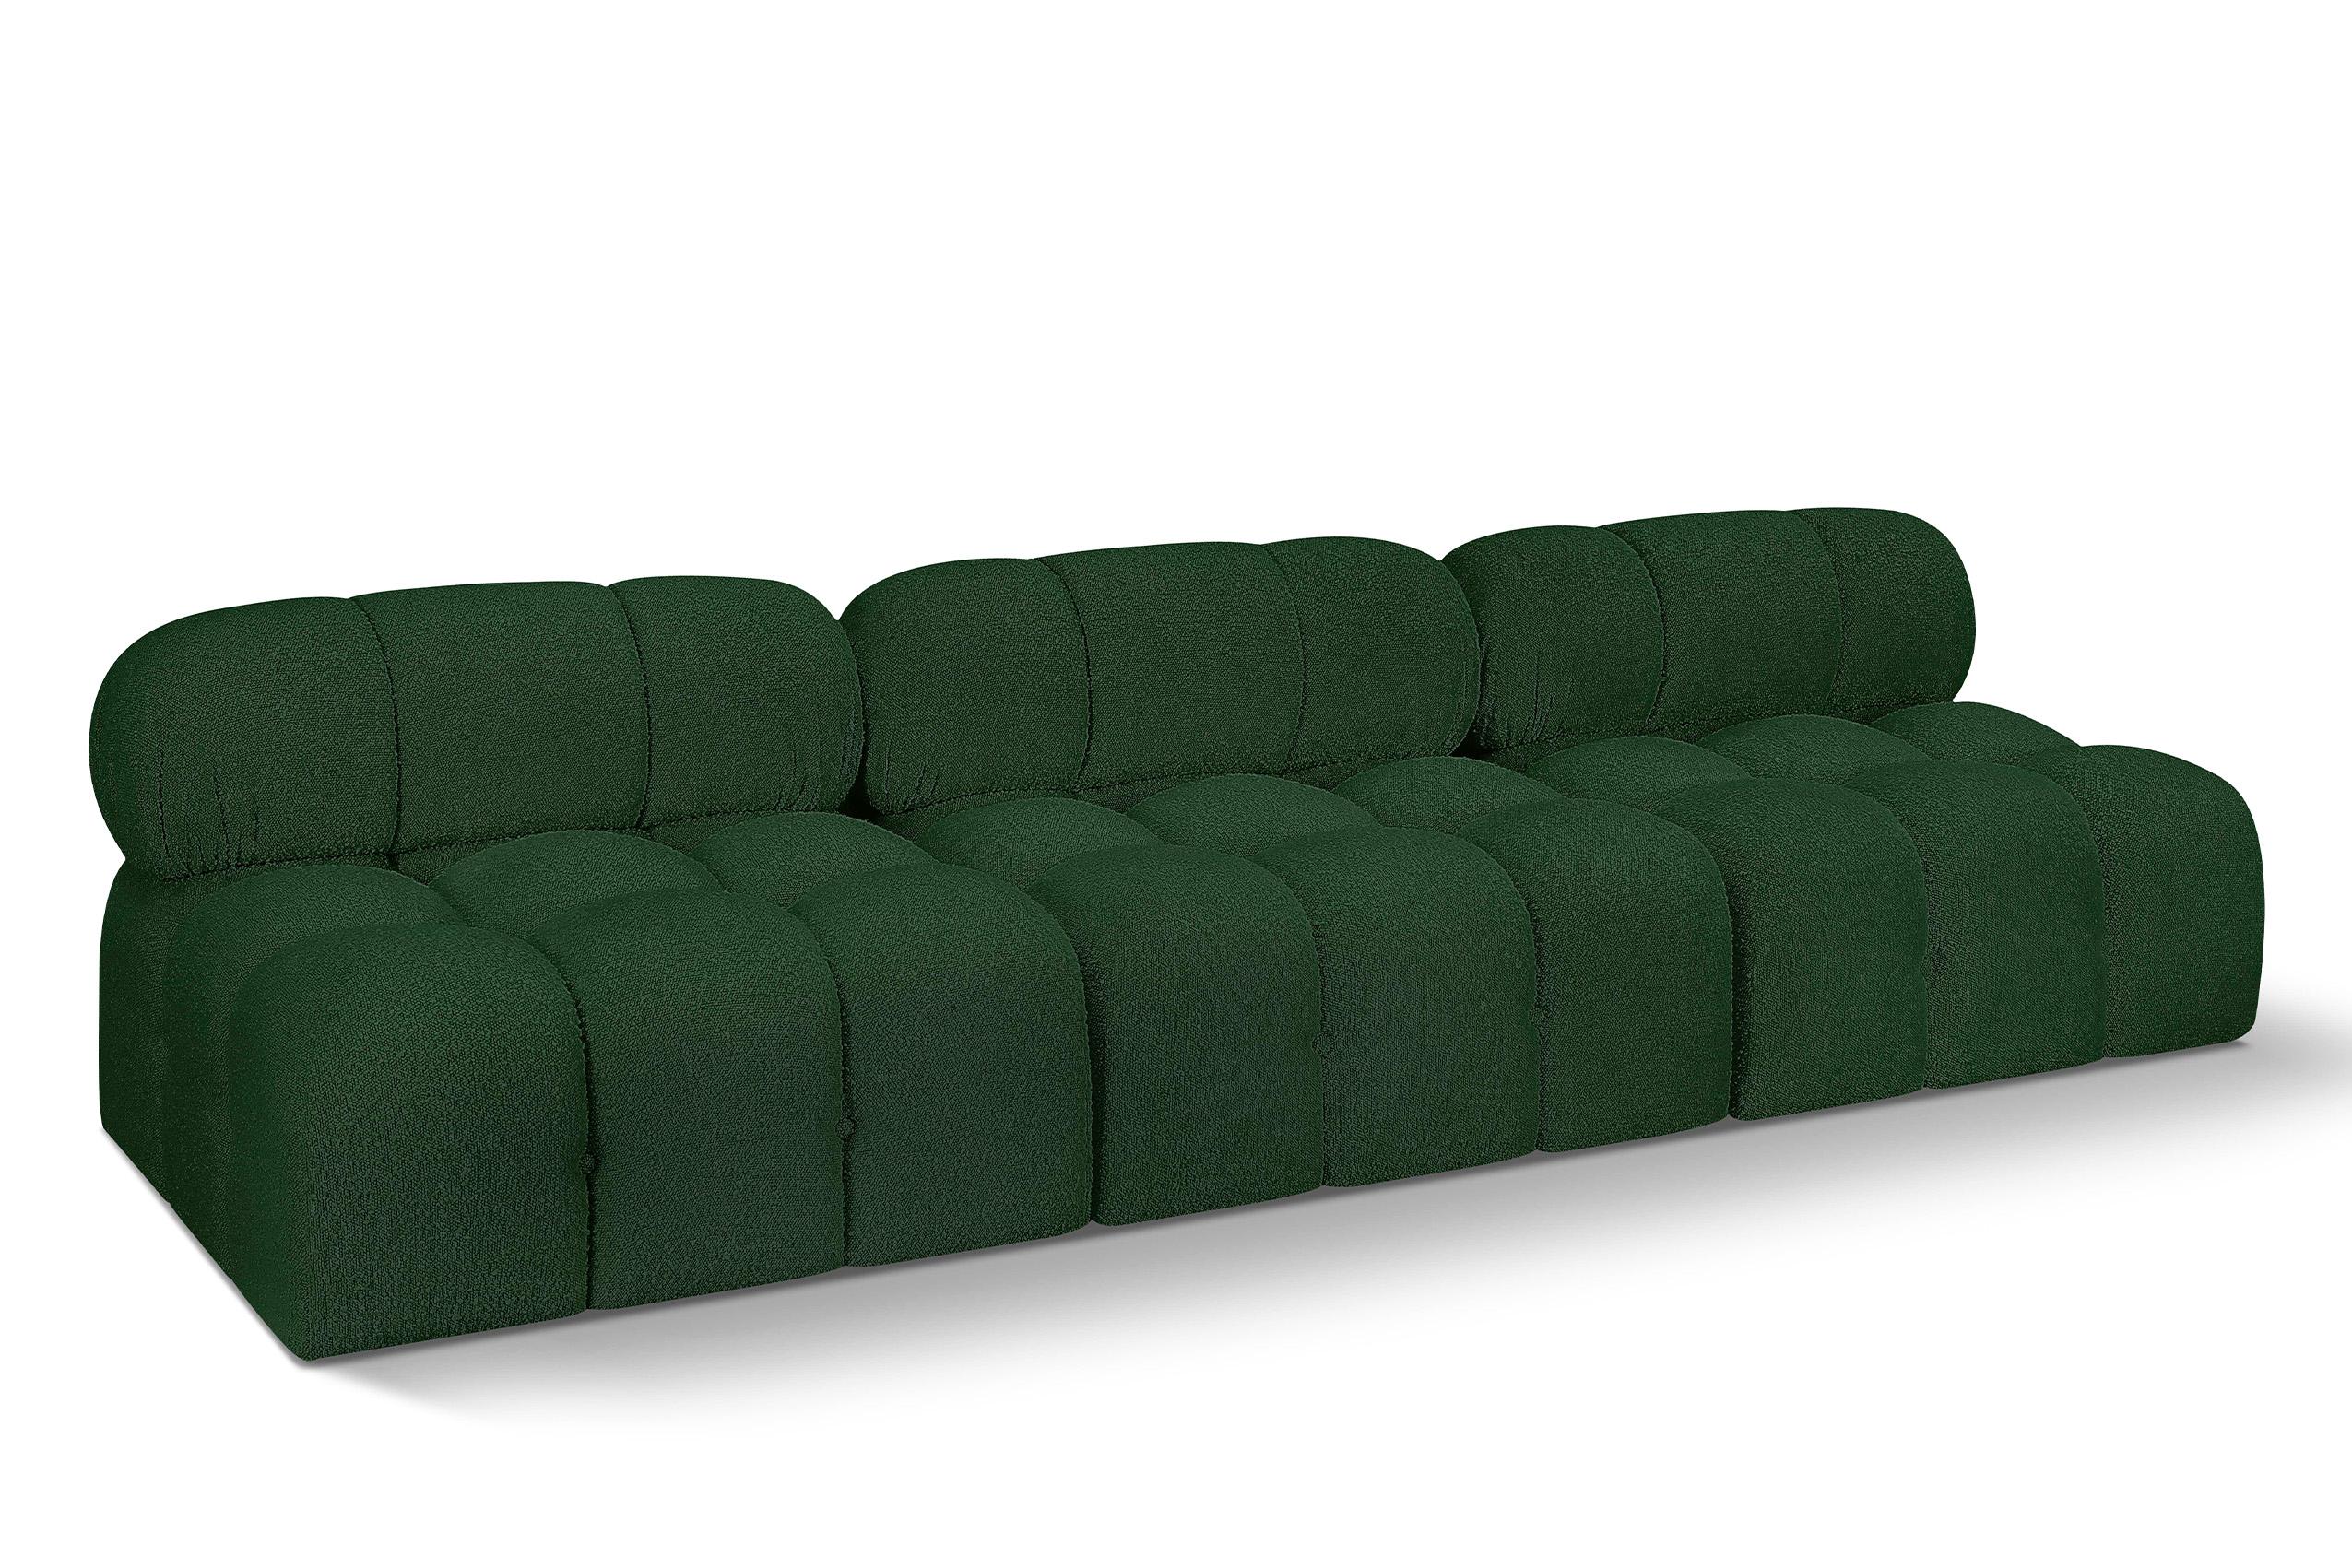 Contemporary, Modern Modular Sofa AMES 611Green-S102B 611Green-S102B in Green 